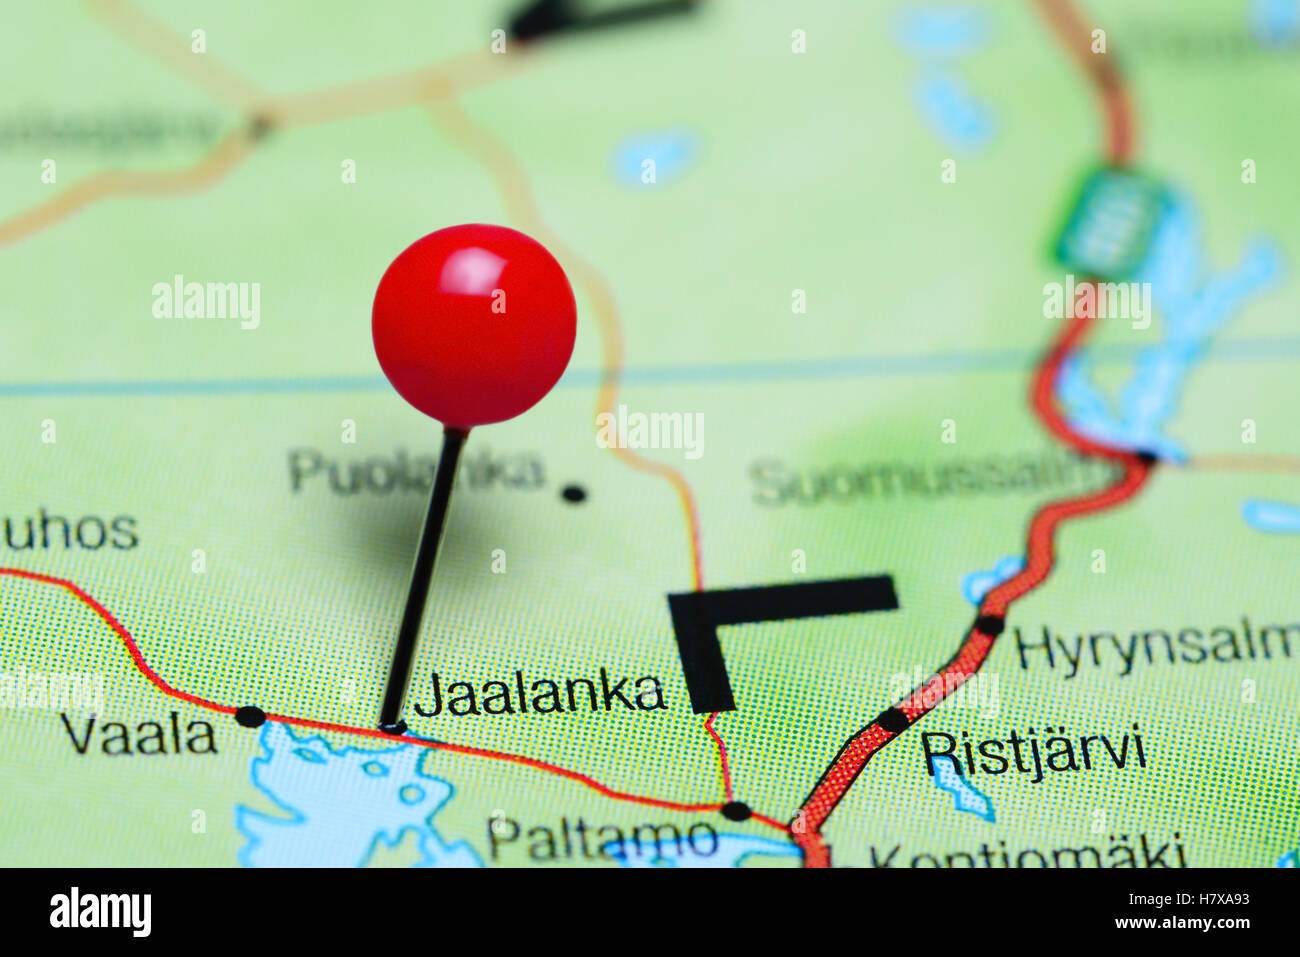 Jaalanka pinned on a map of Finland Stock Photo